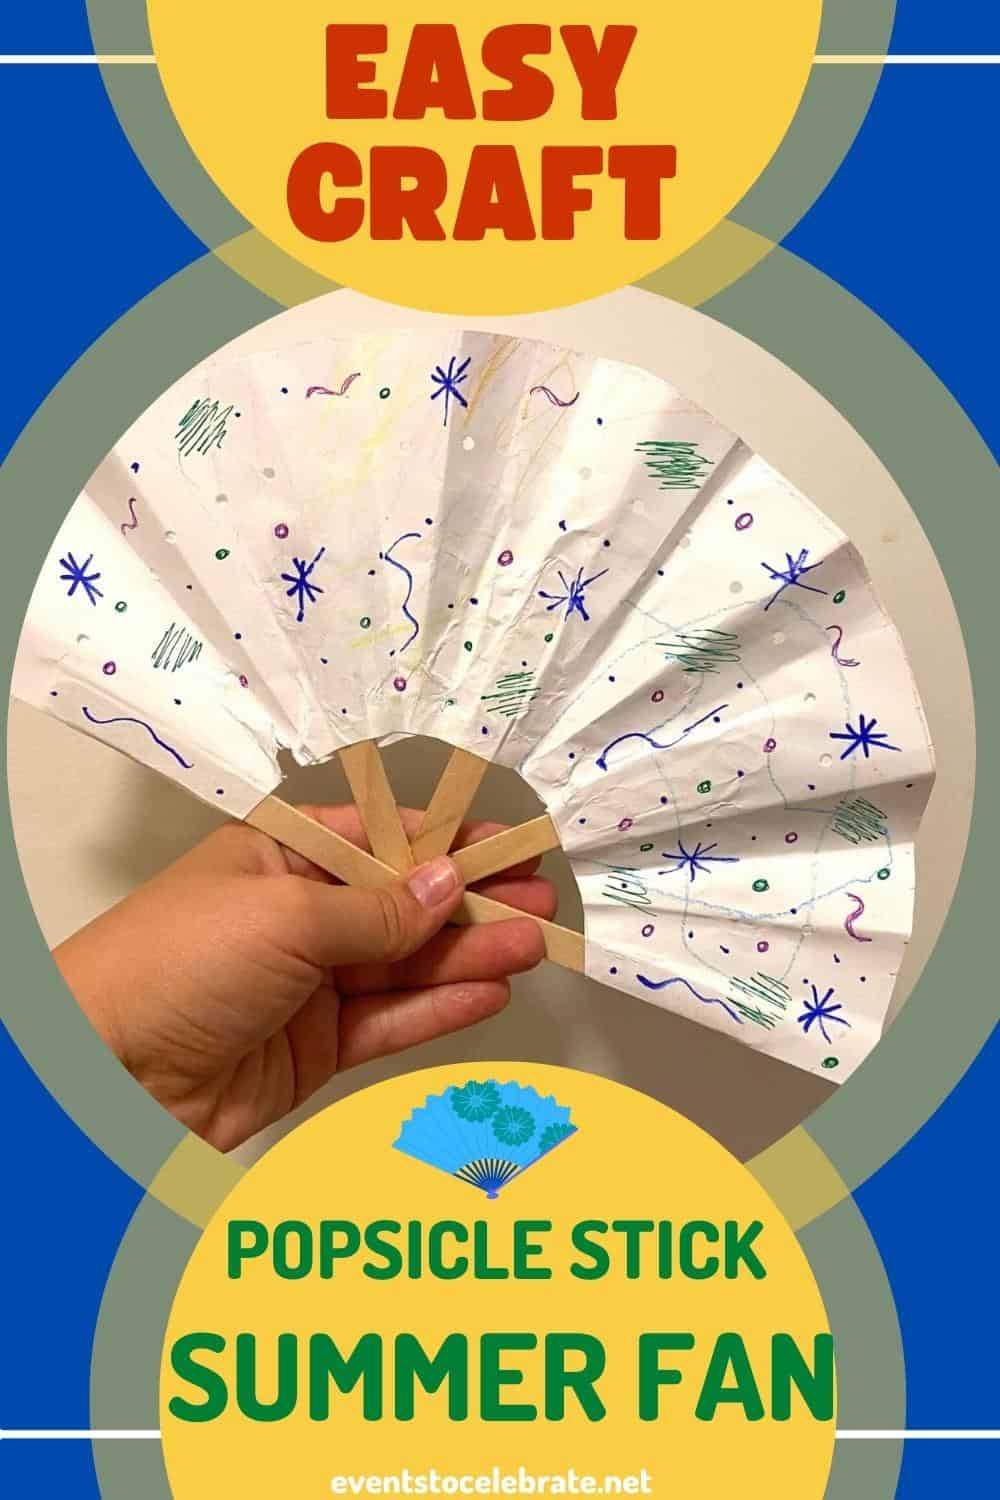 Popsicle stick fan summer craft idea full tutorial